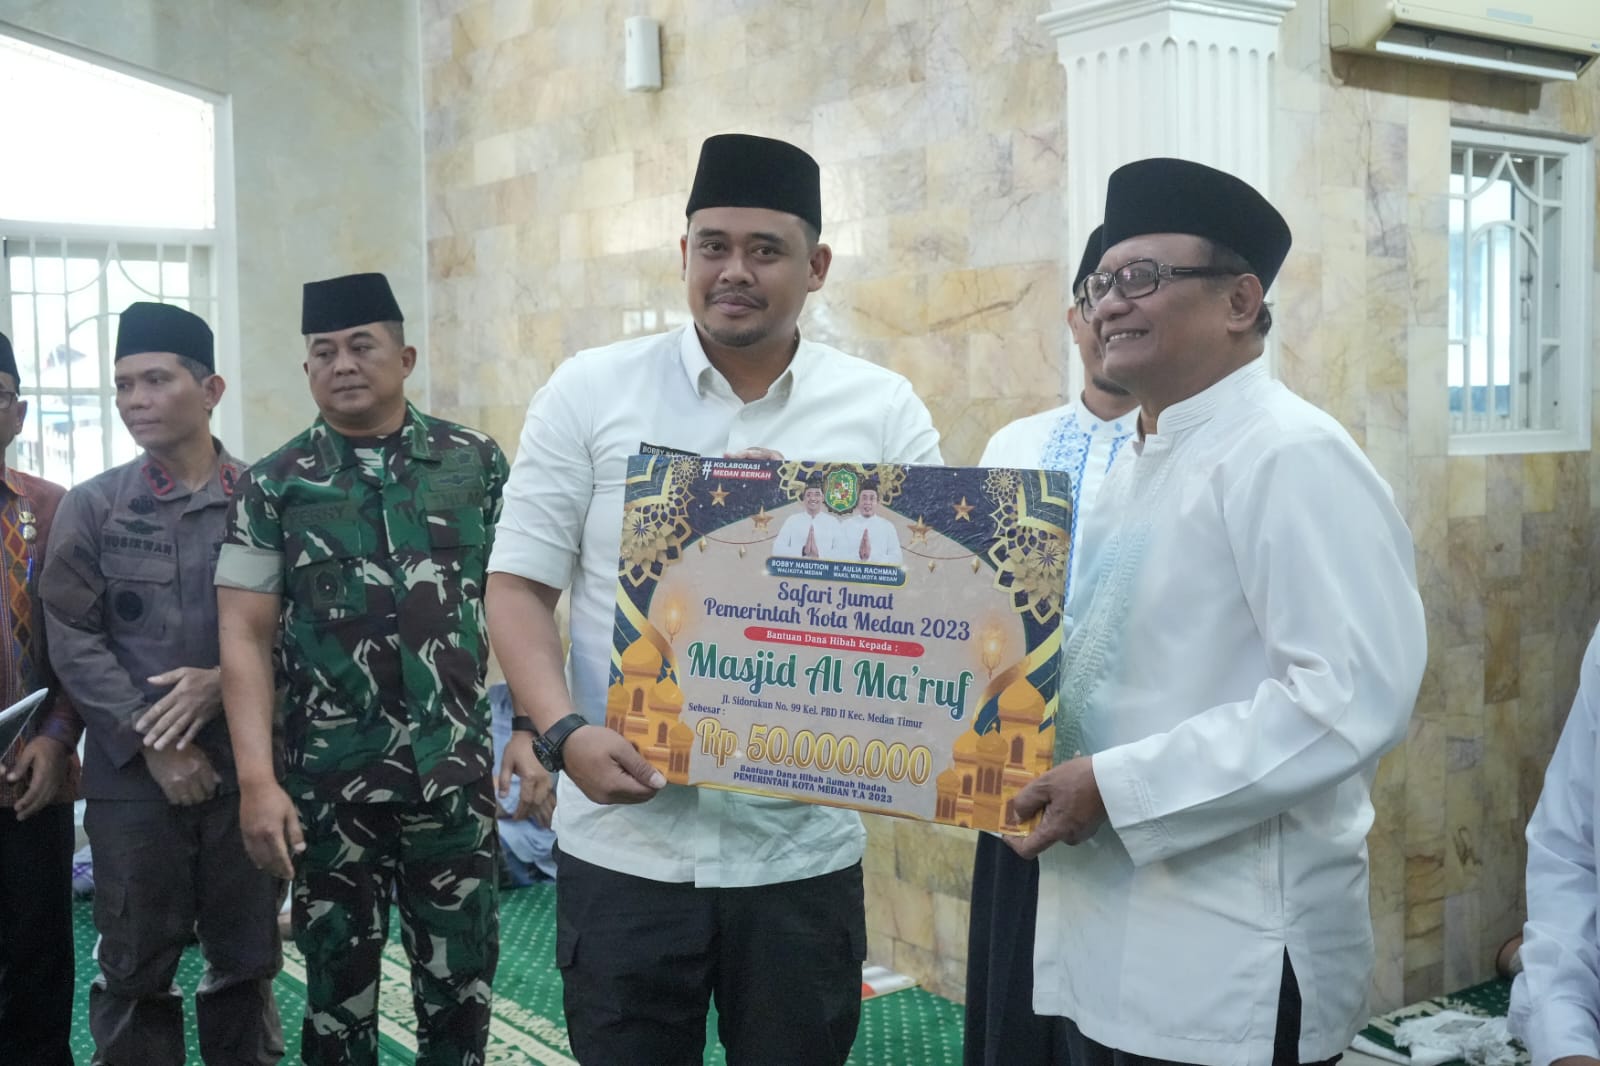 Safari Jumat ke Masjid Al Maruf, Bobby Nasution: Masjid Juga Wadah Belajar dan Berbagi Informasi Ekonomi Syariah